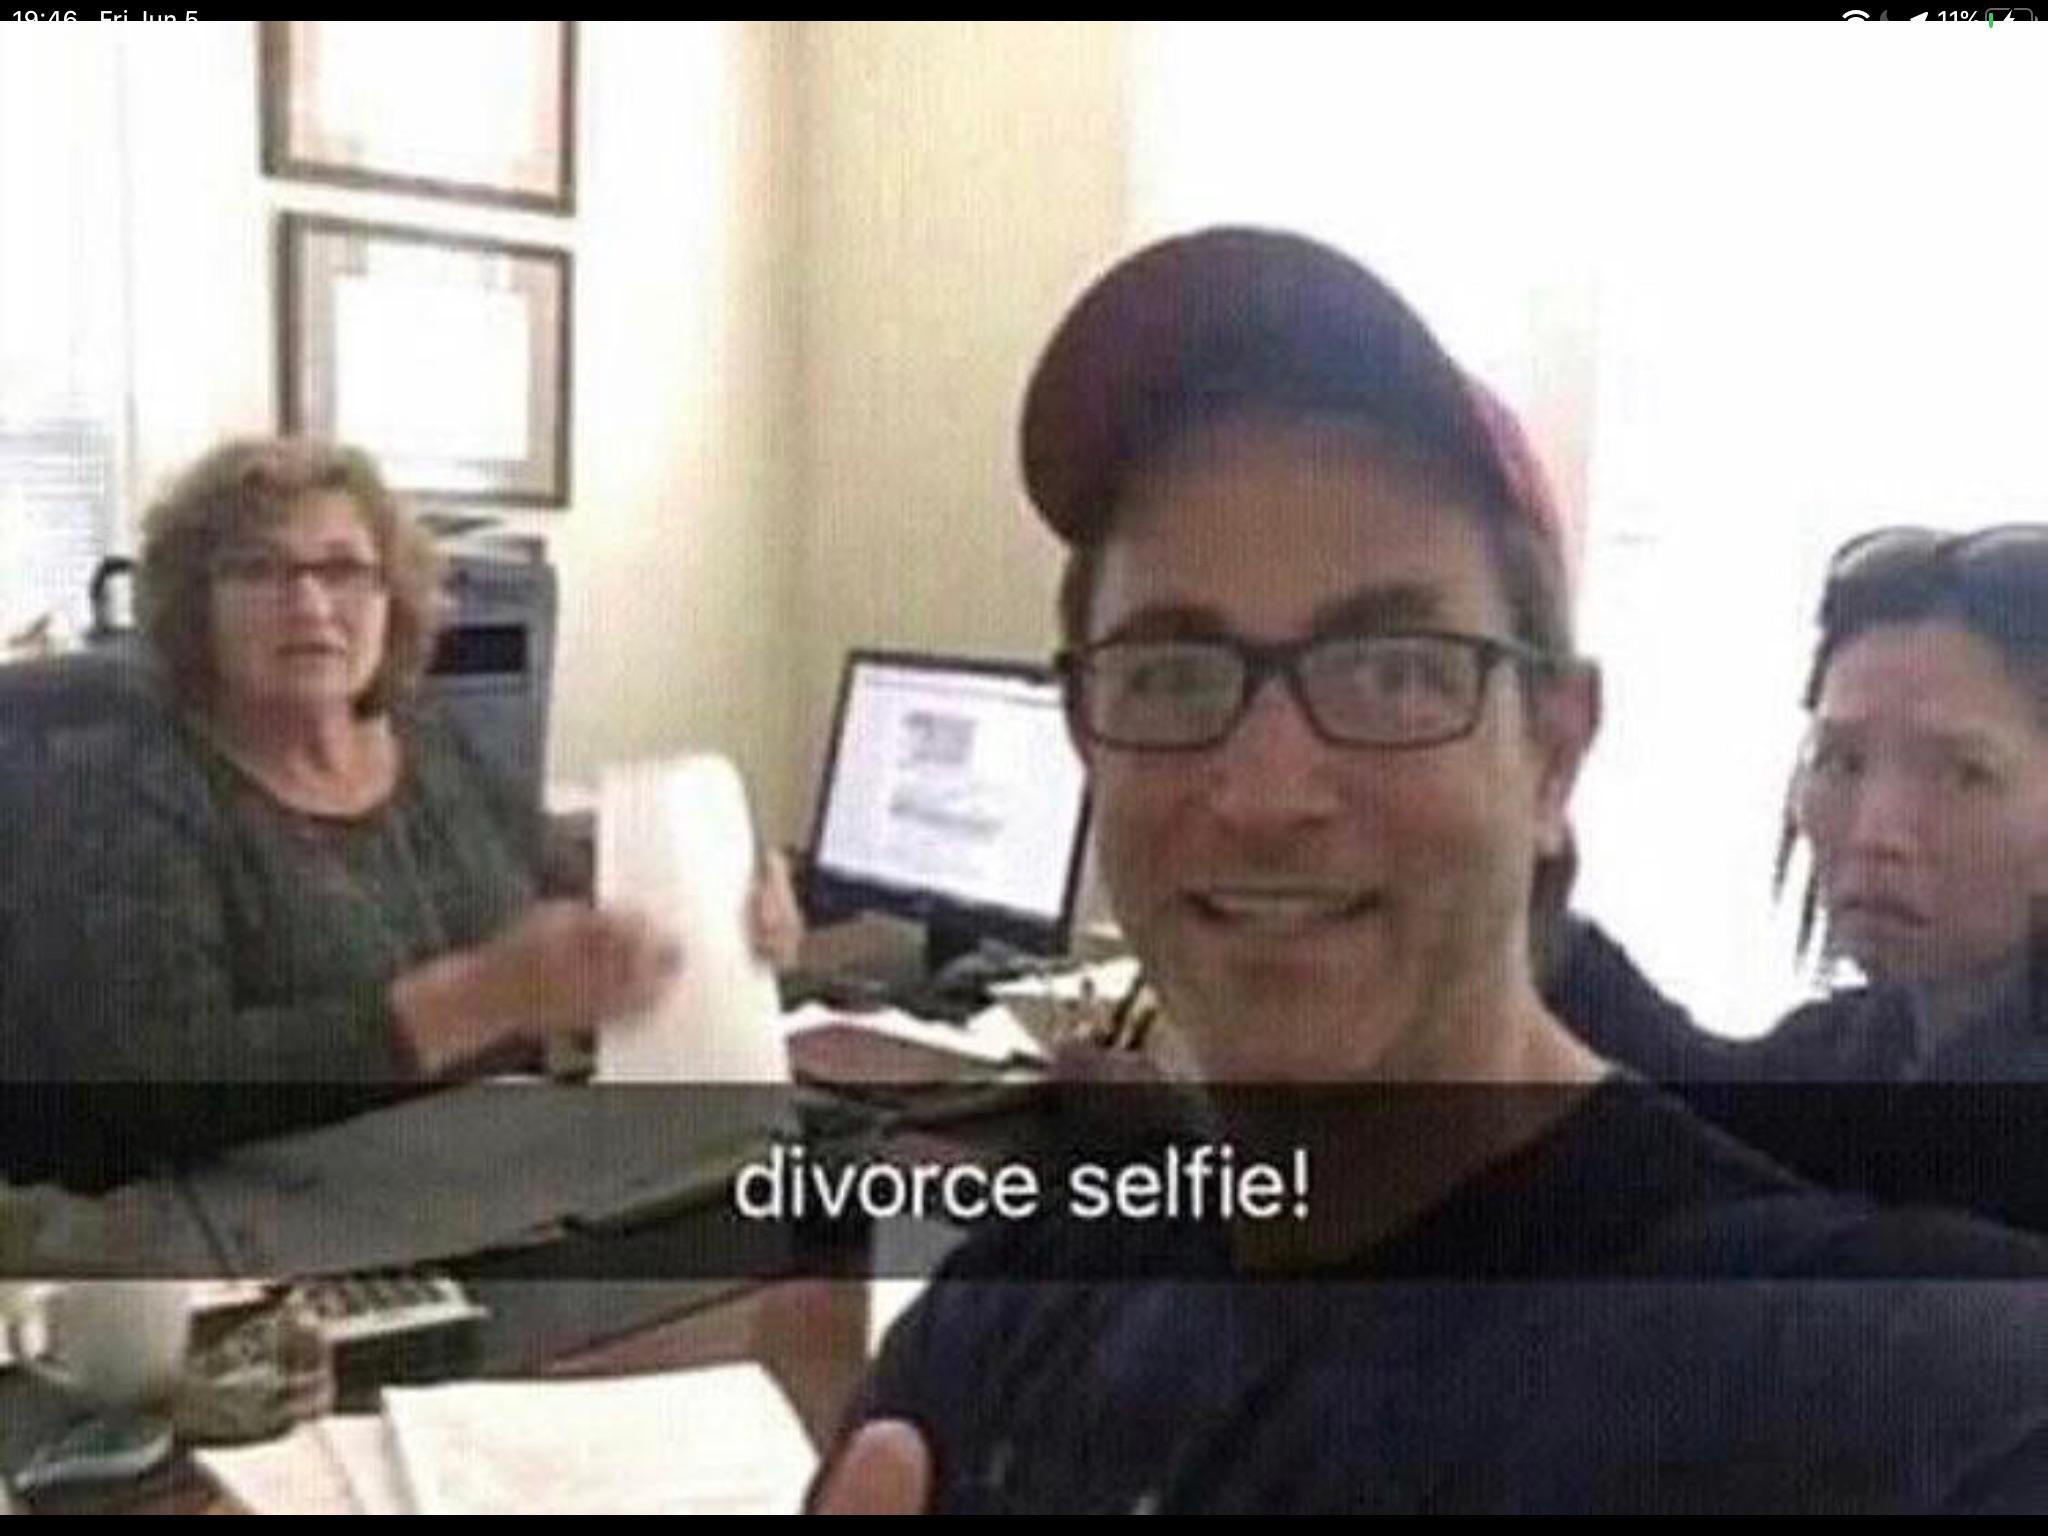 cursed memes - divorce selfie meme - Cri un 5. 1107 divorce selfie!